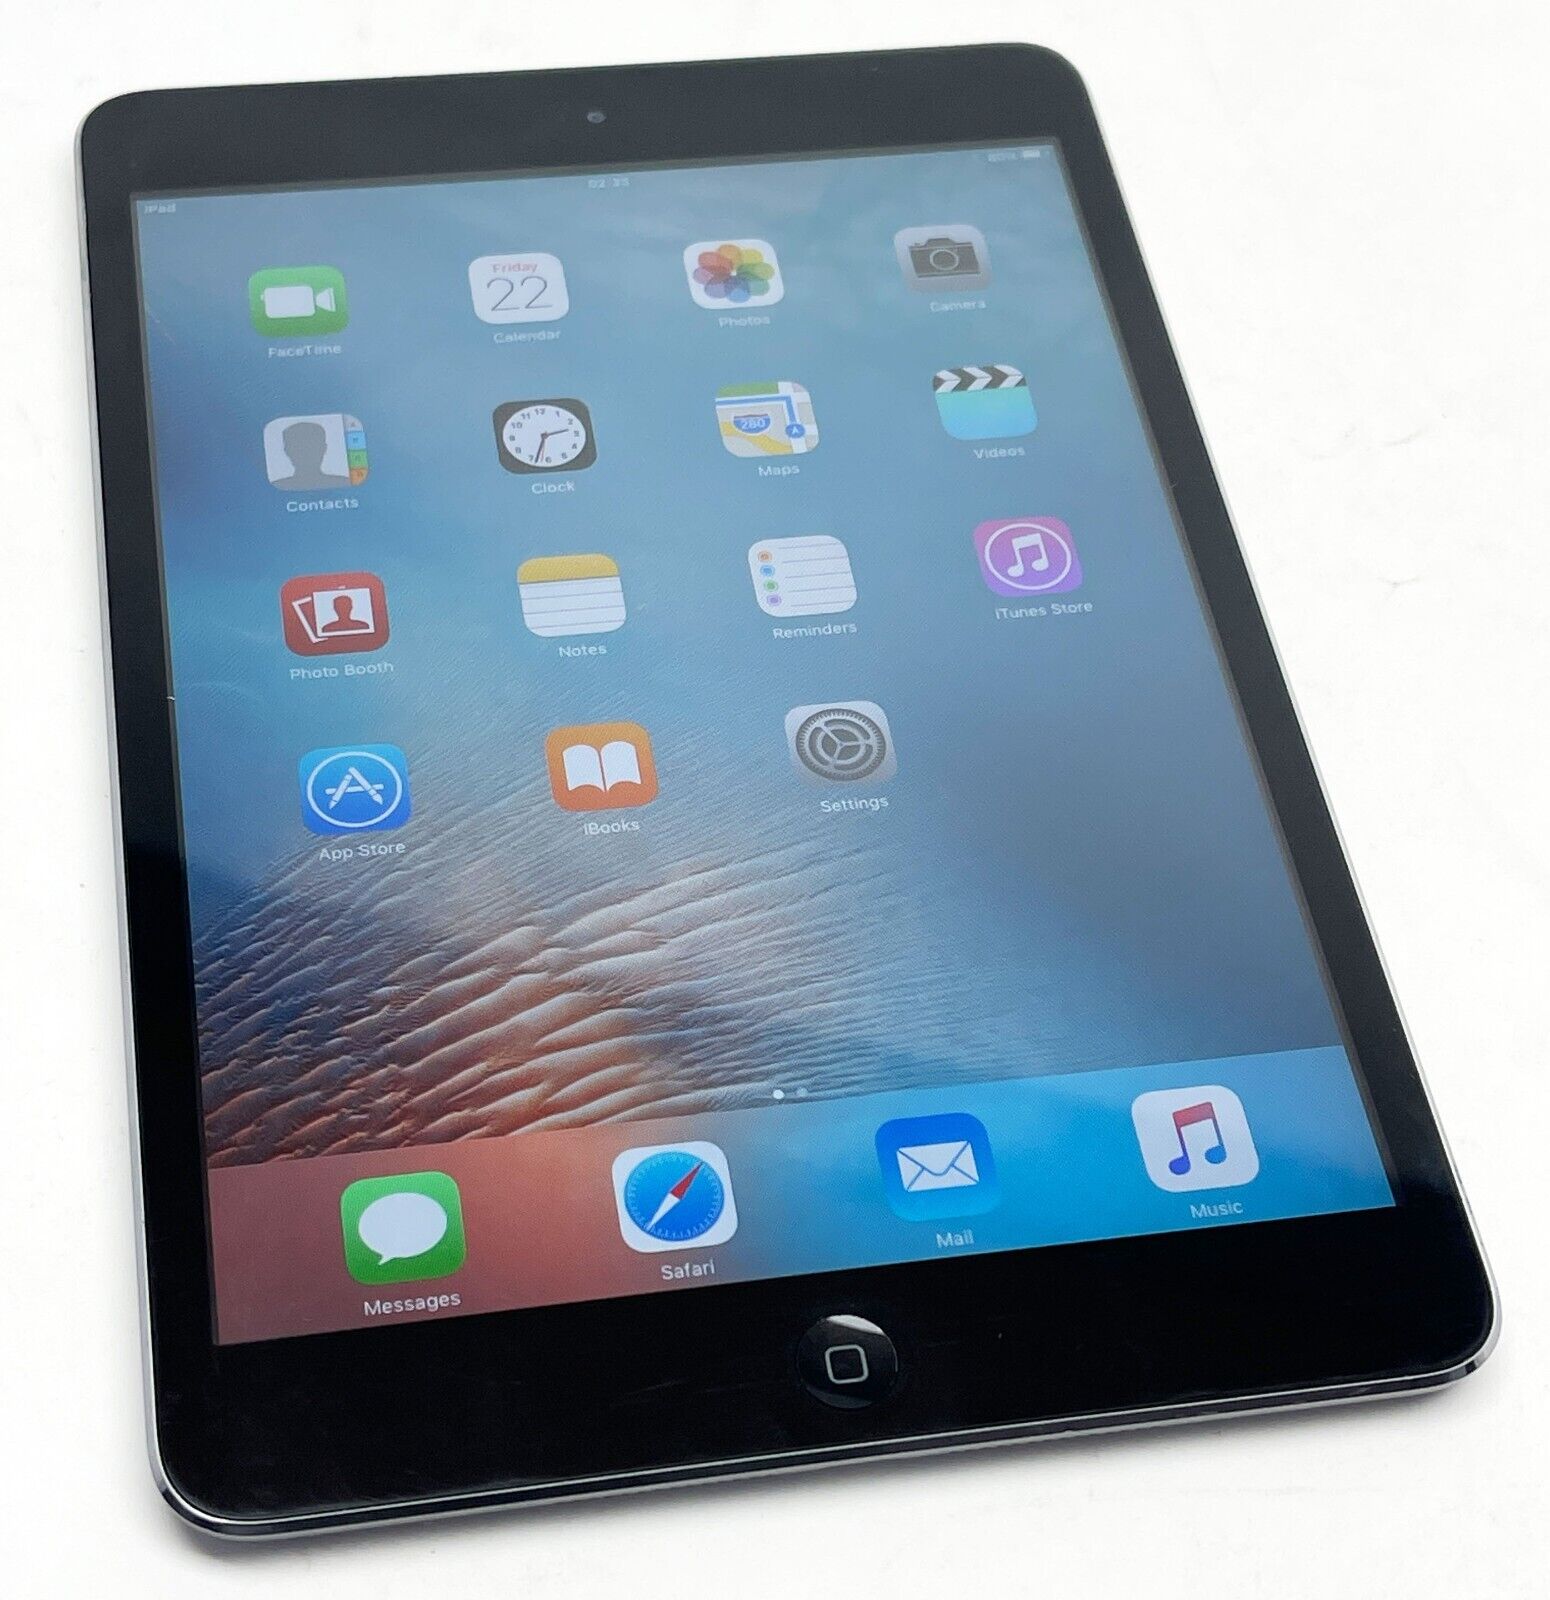 Lot of 10 Apple iPad Min 1st Generation A1432 16GB, 7.9in - Space Gray- Unlocked